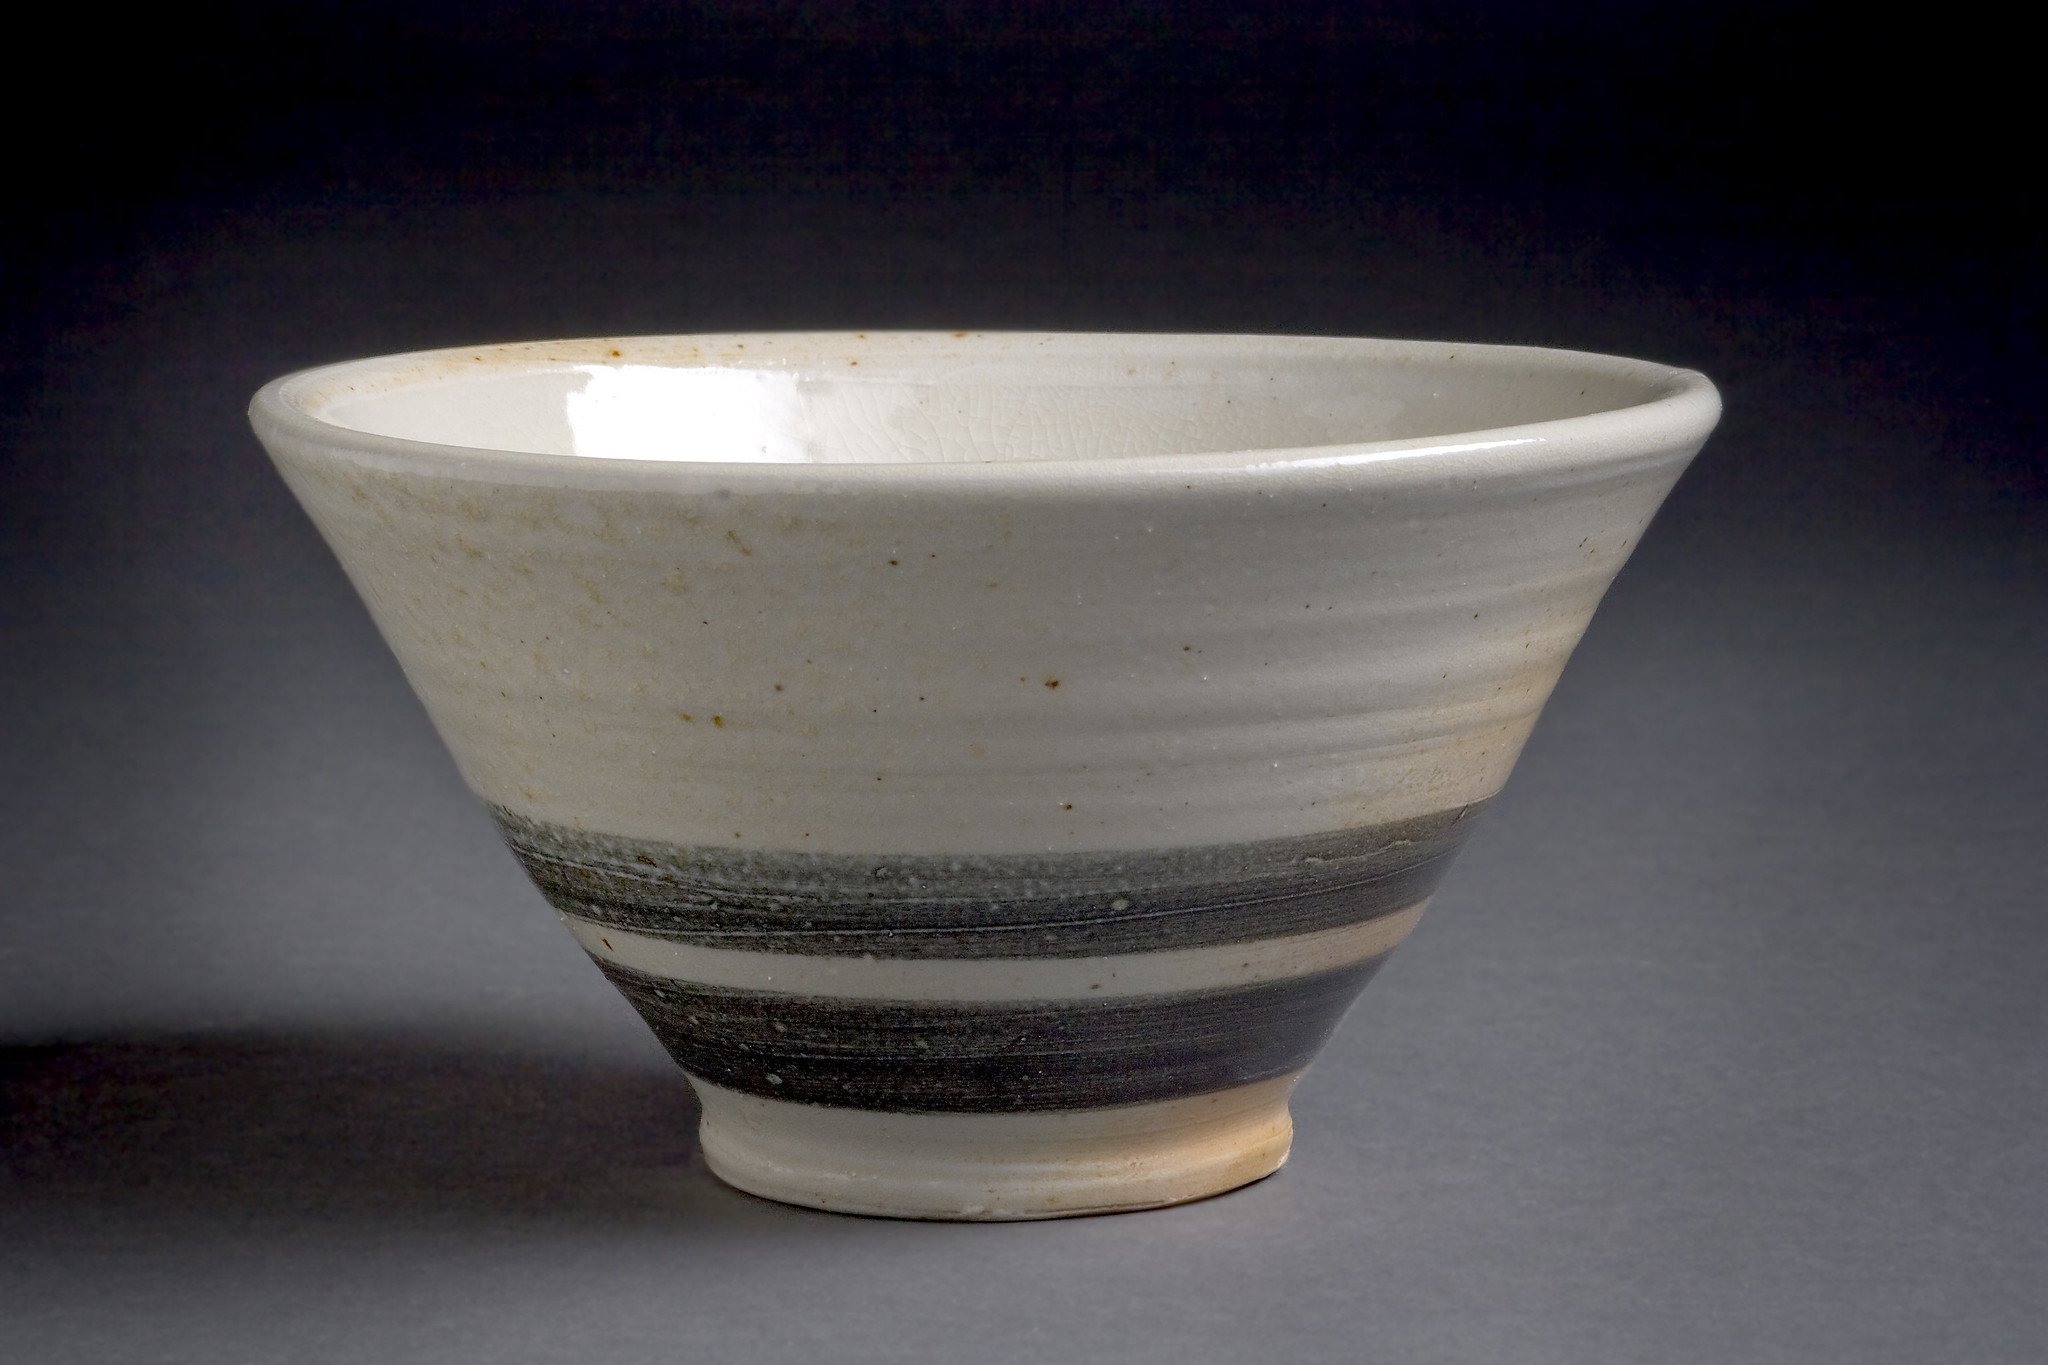    Bowl  , wood fired stoneware, 6” x 6” x 4” 